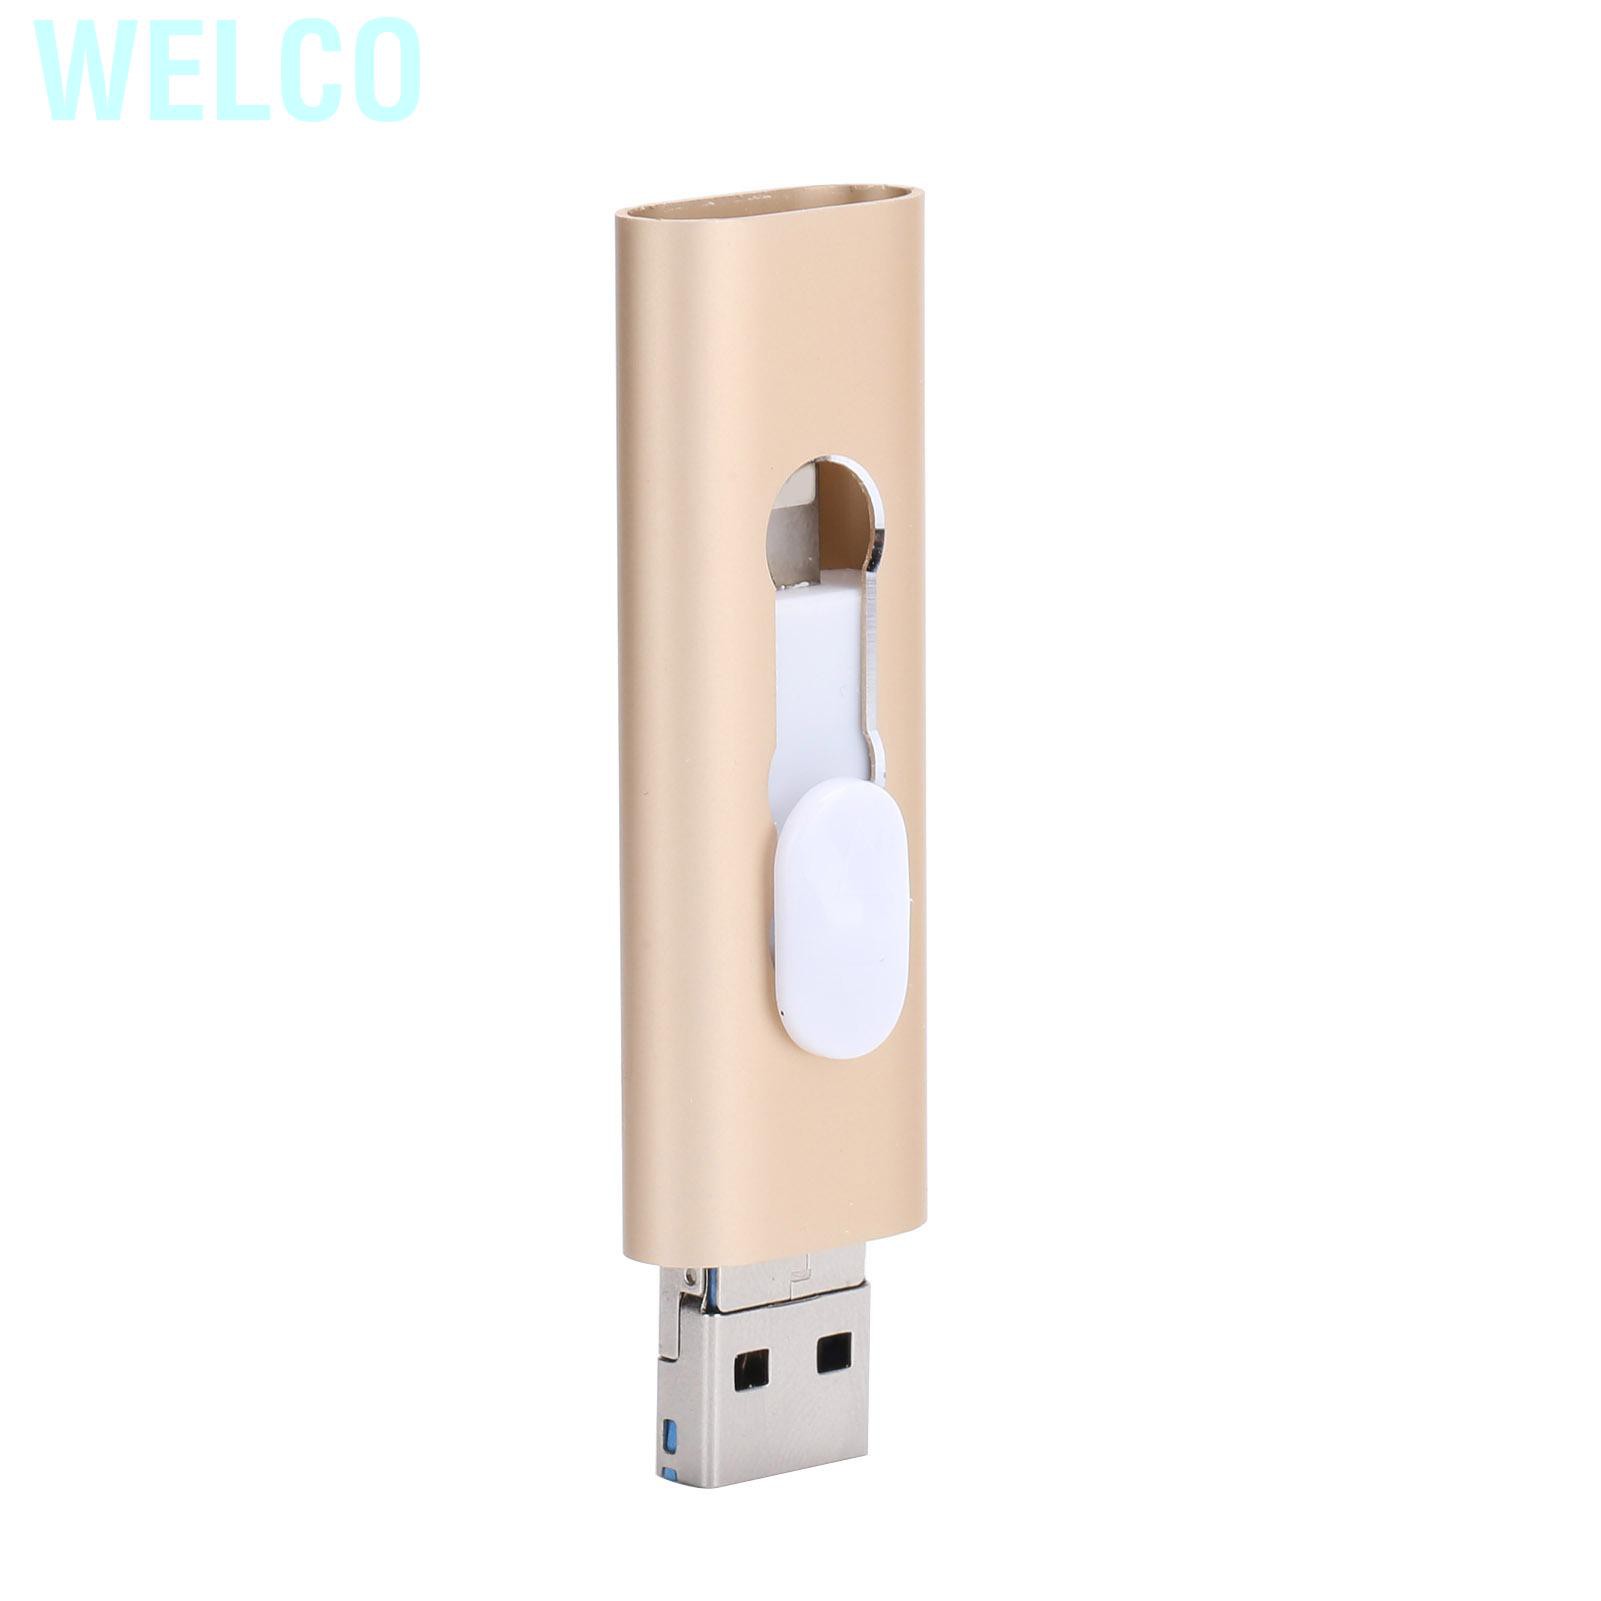 Welco 32GB Thumb Push Flash Drive USB Memory Stick External Storage OTG U Disk for IOS/OS X